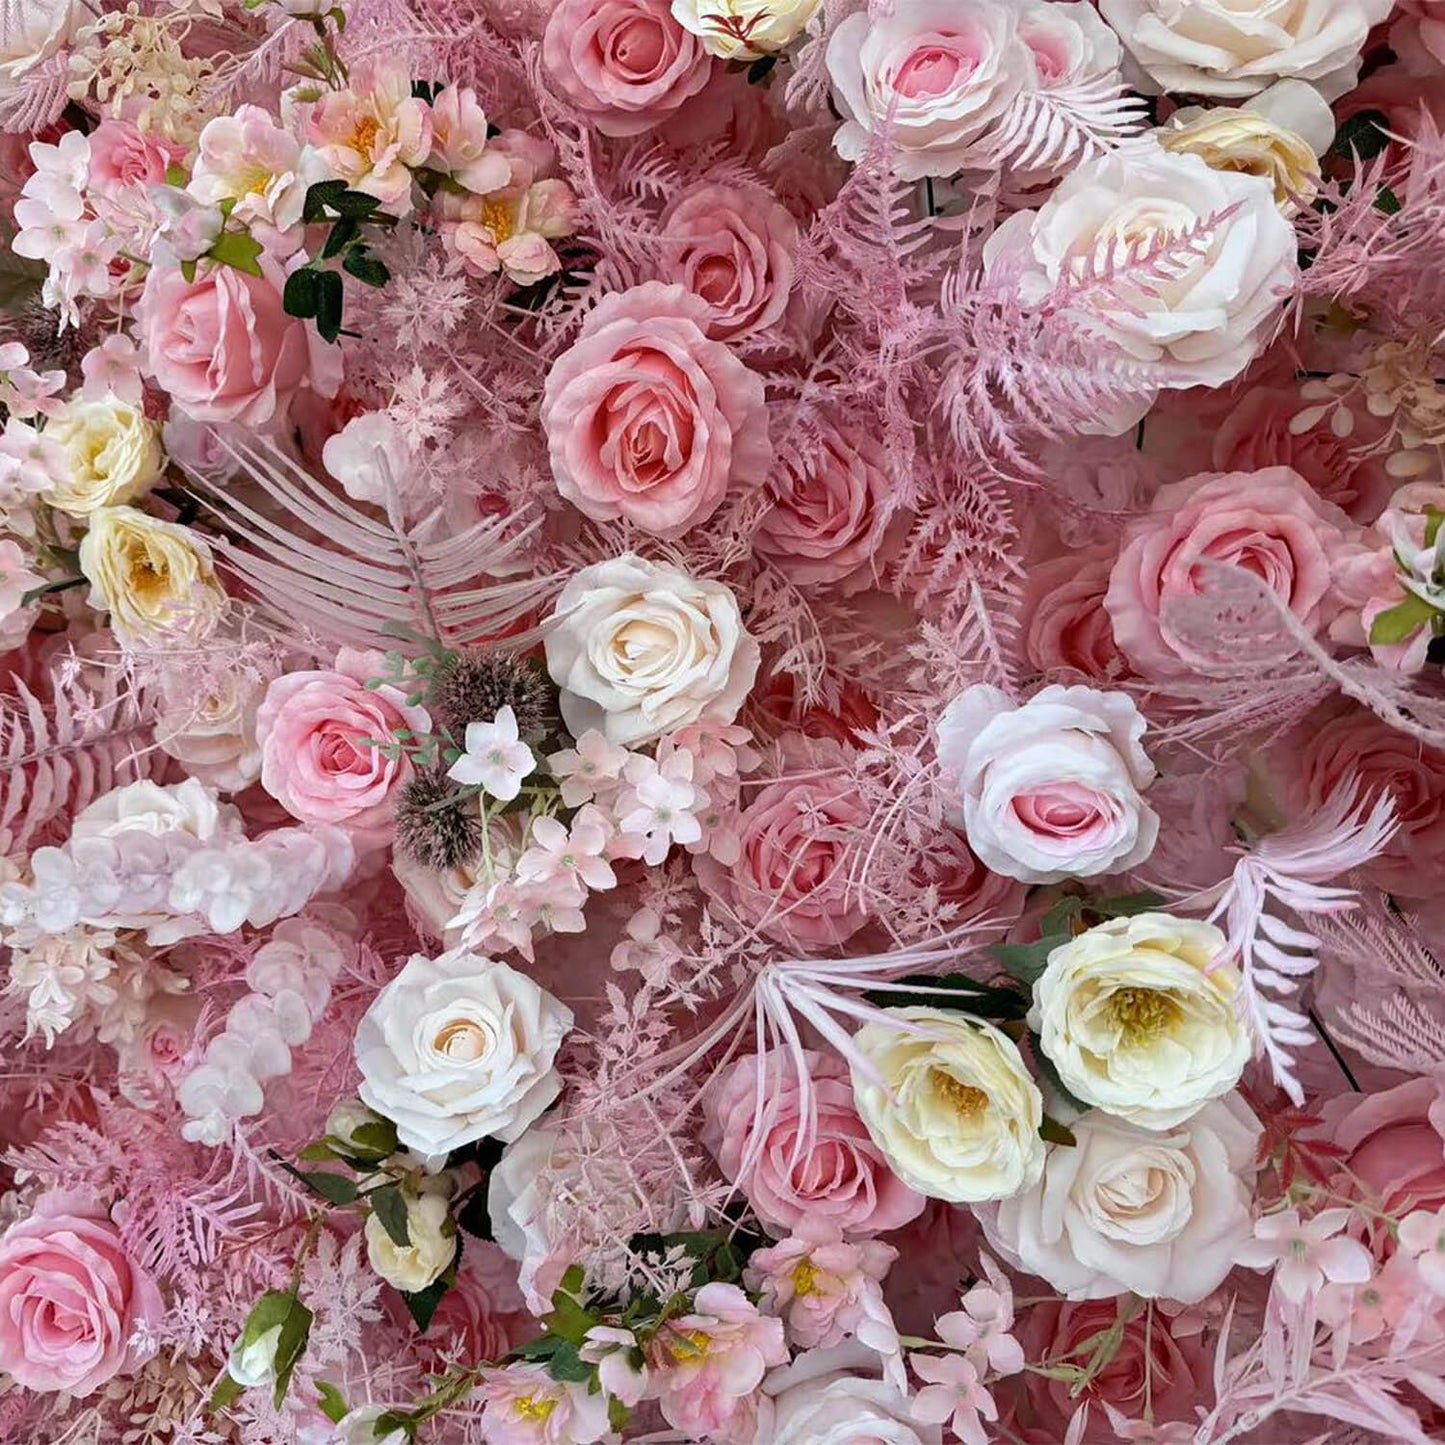 5D Boho Pink Fabric Artificial Flower Wall Event Decoration-ubackdrop